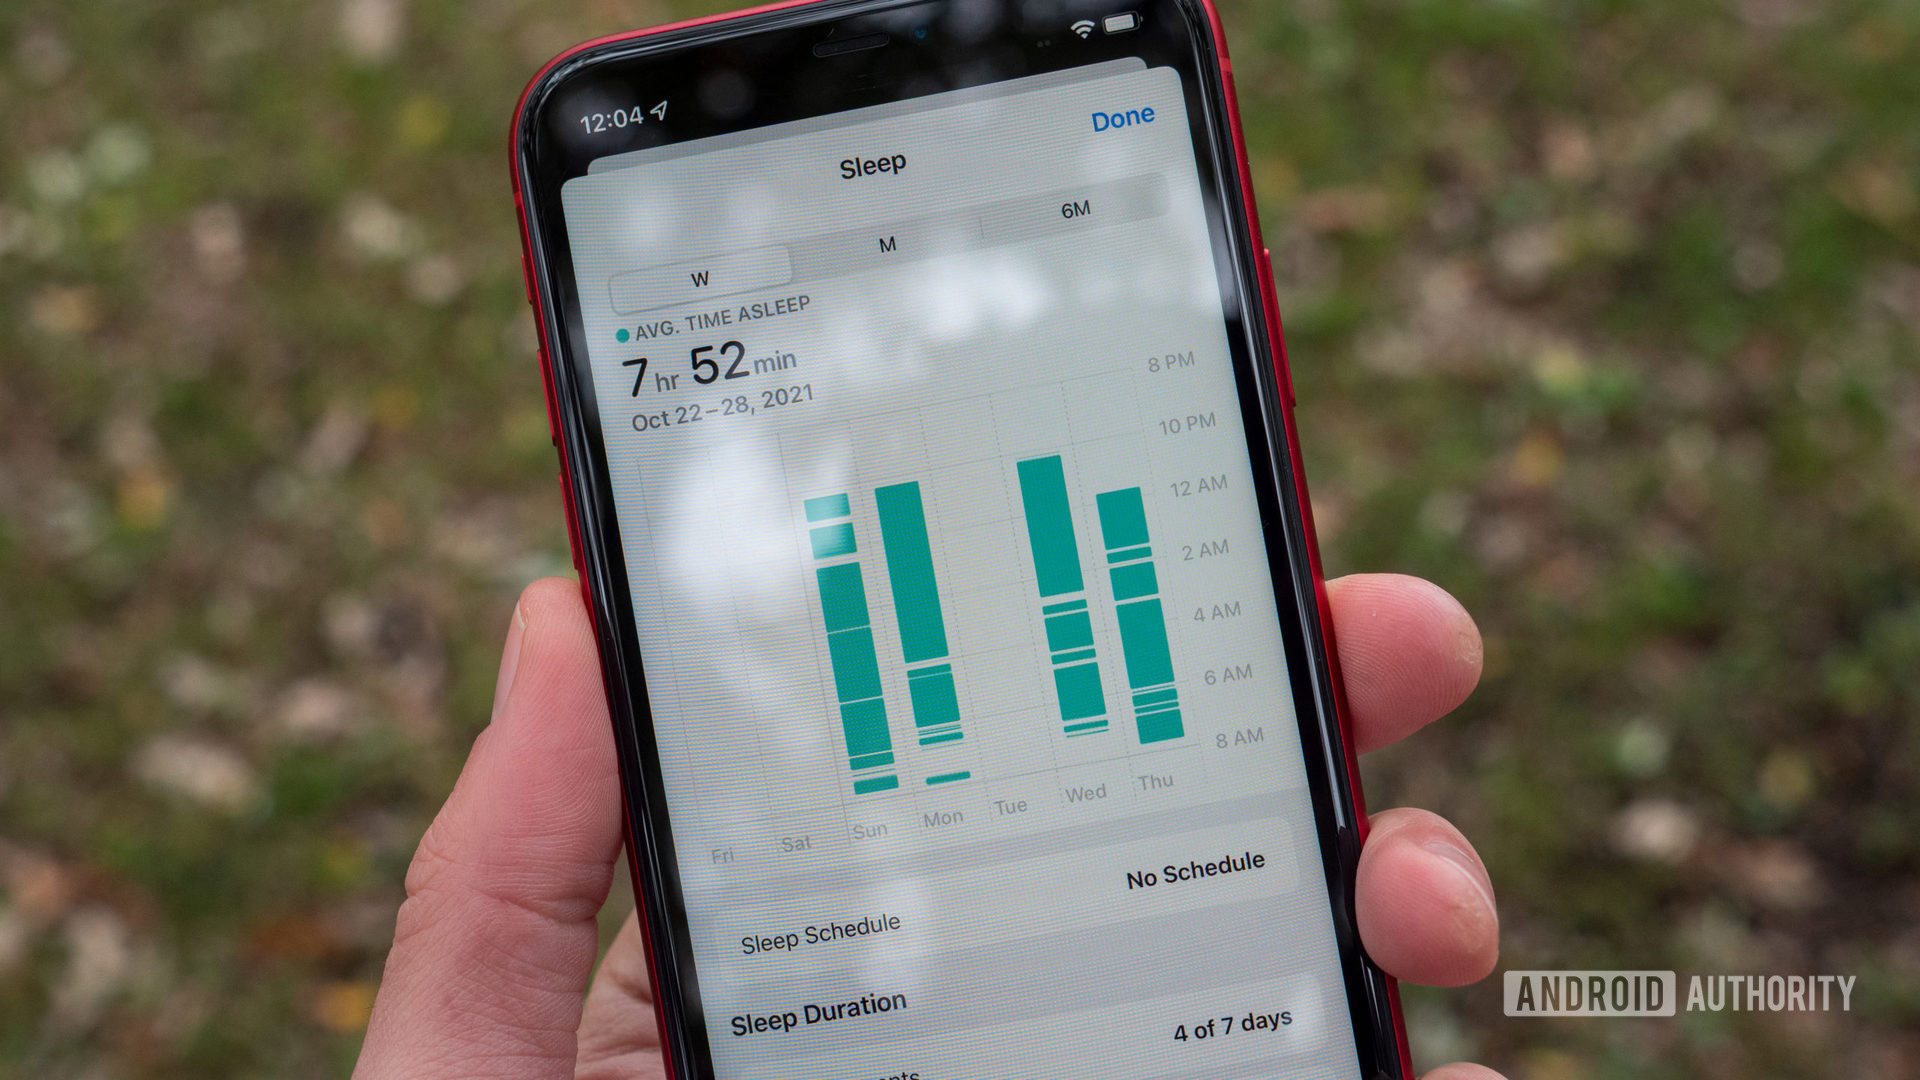 The iPhone 11 Apple Health app displays the user's sleep tracking data.